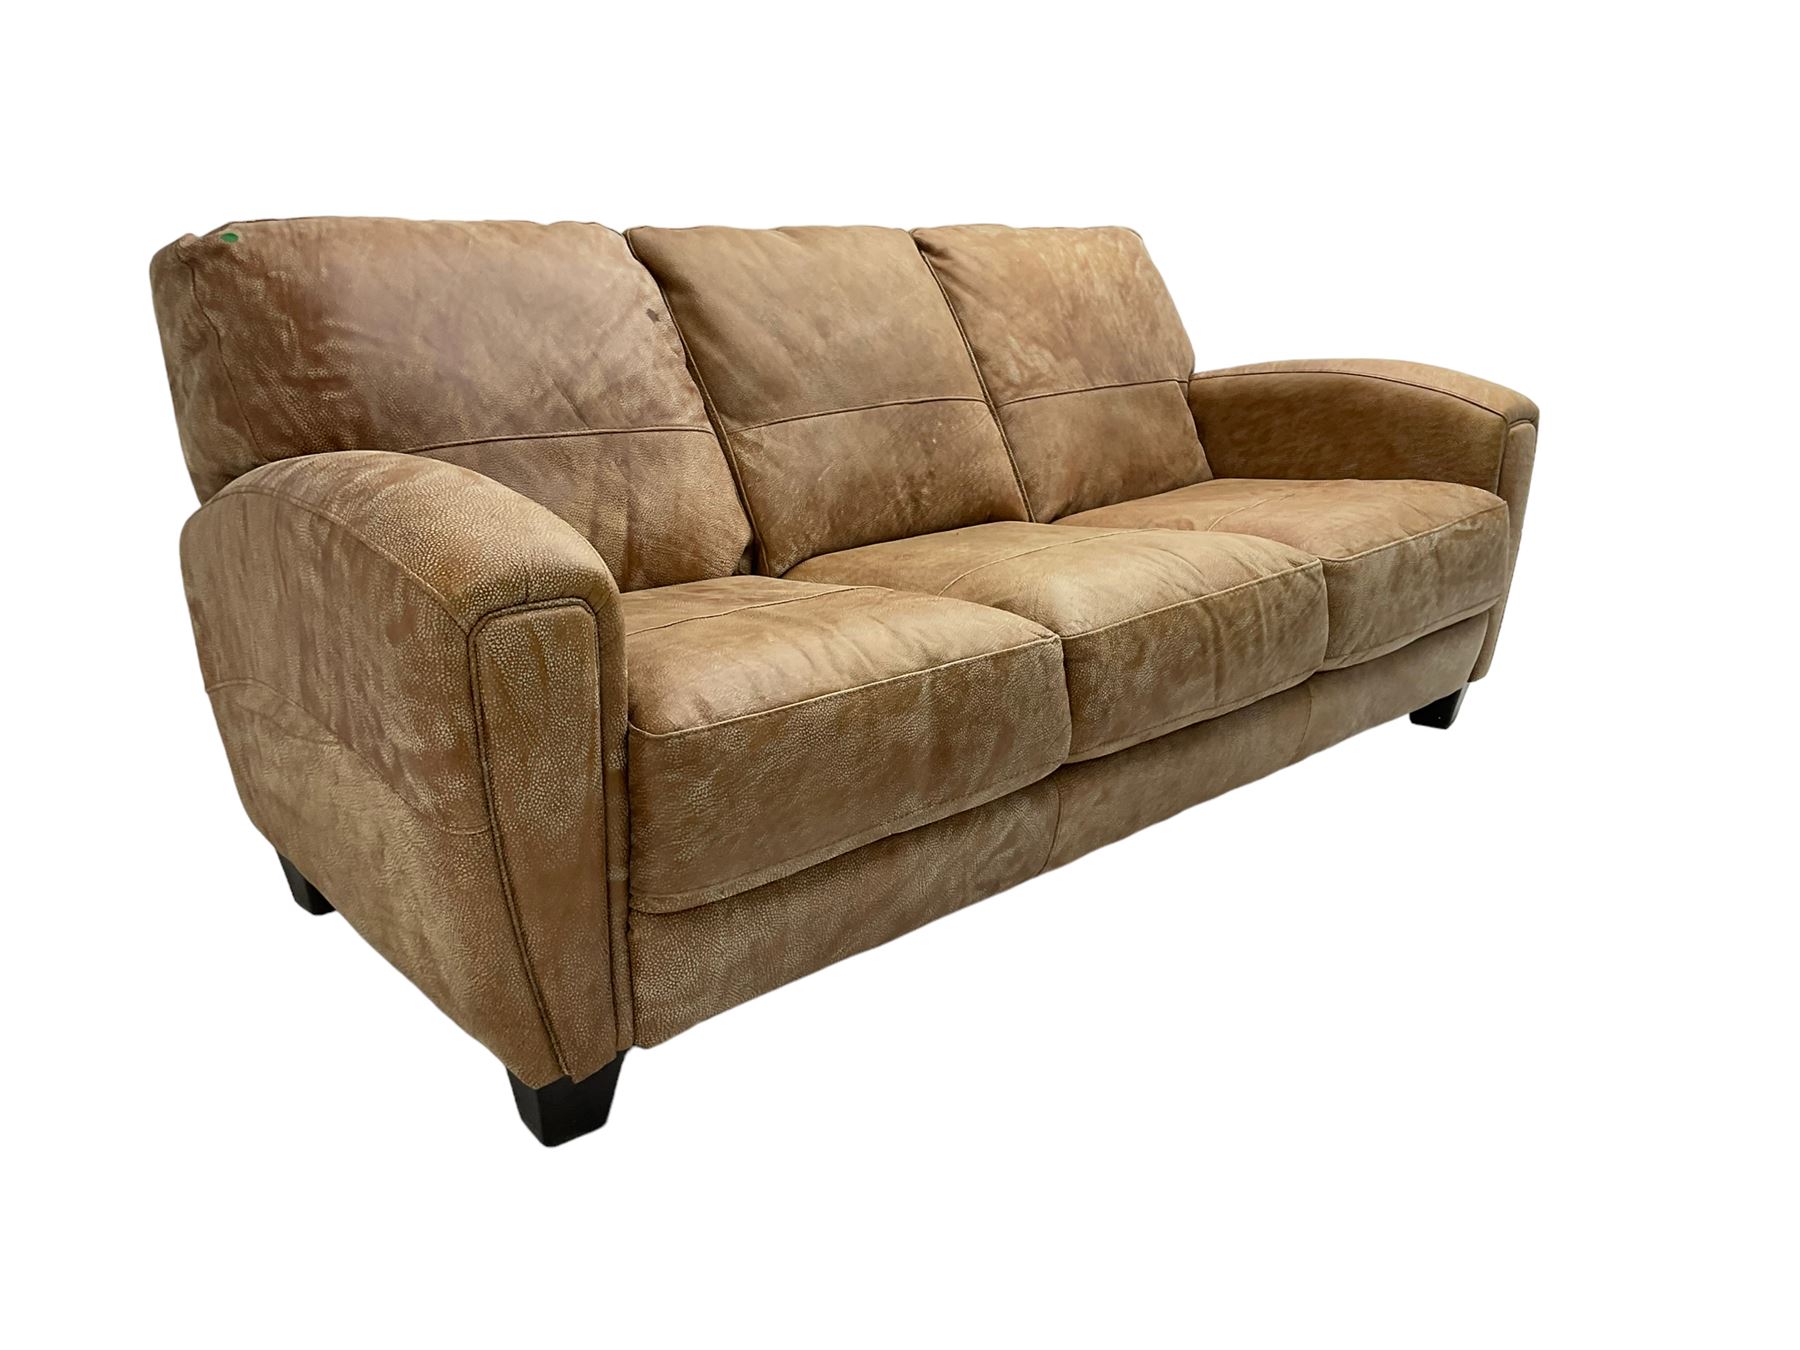 Three seat sofa - Image 3 of 6